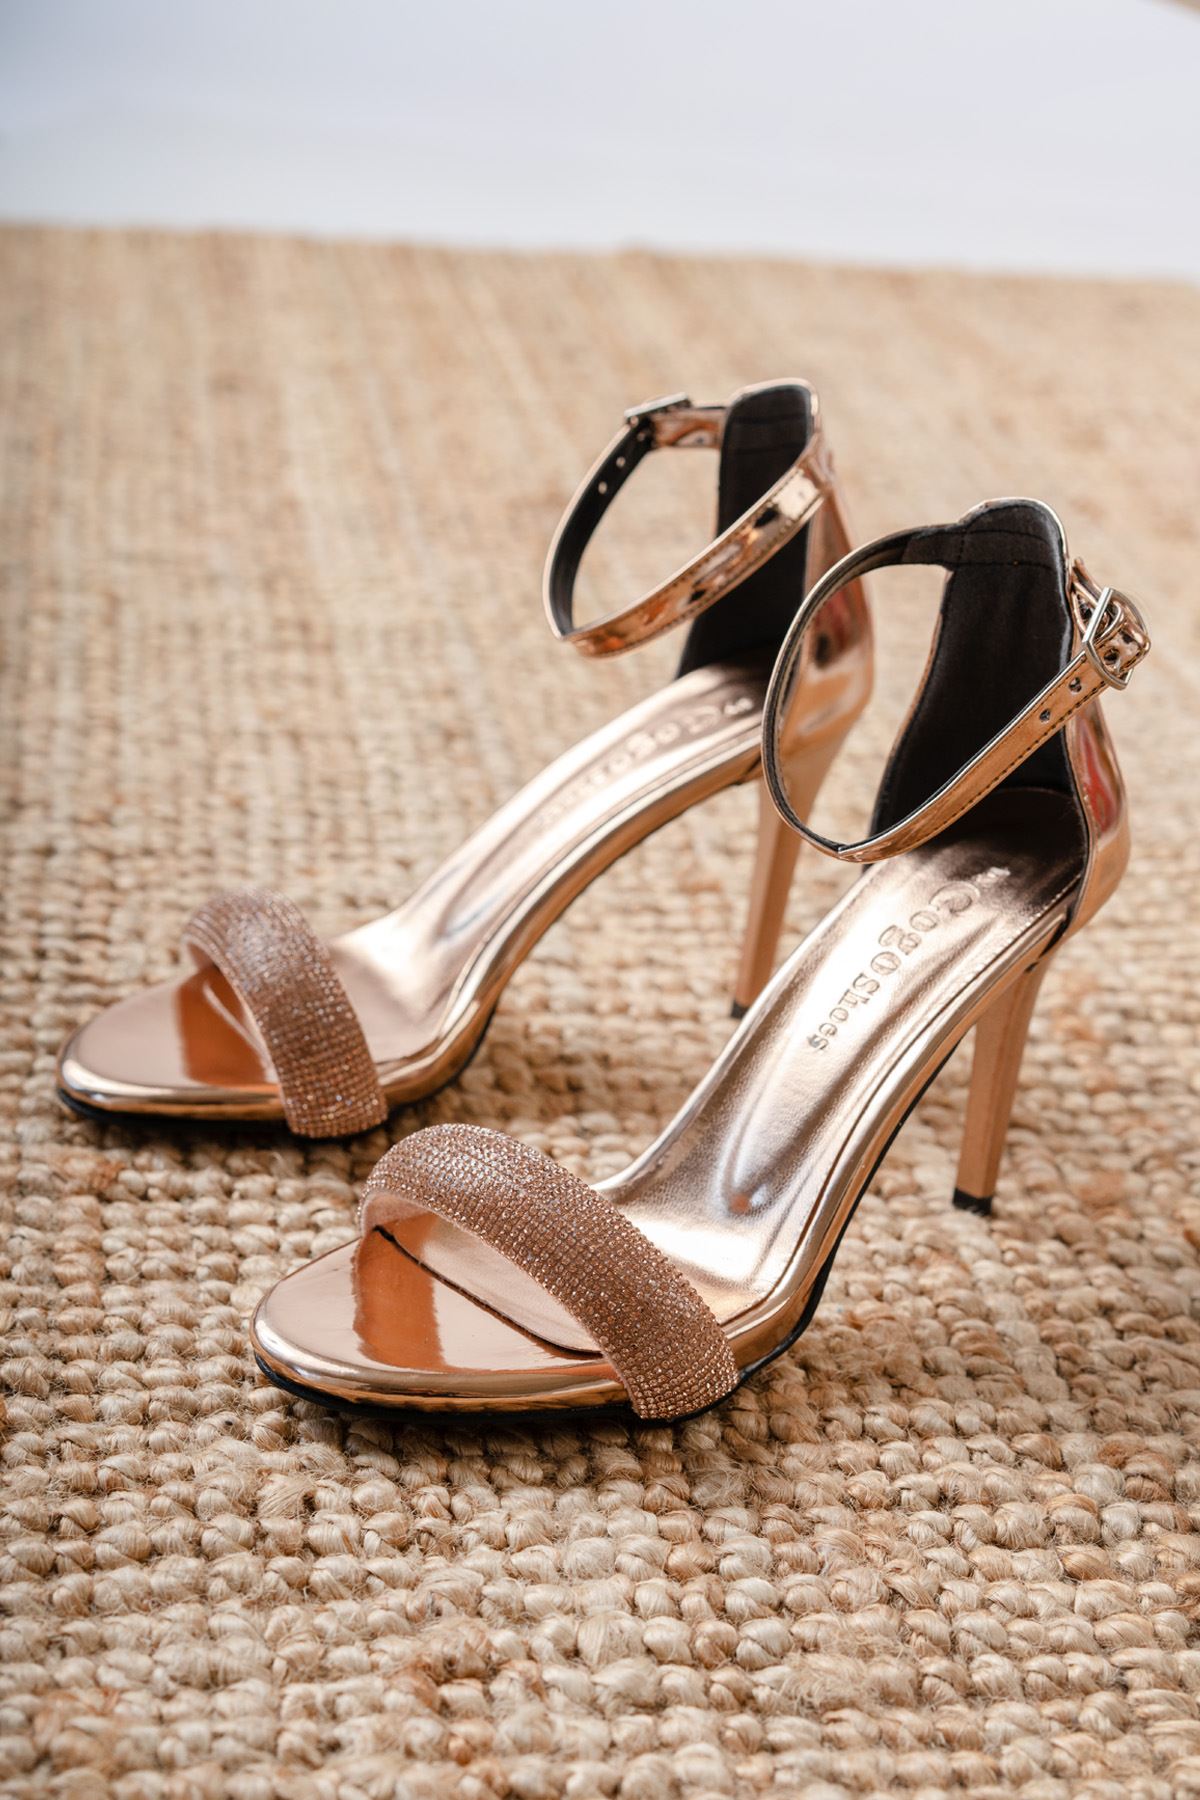 Marfa Gold Rugan Taş Detaylı İnce Topuklu Kadın Ayakkabı 